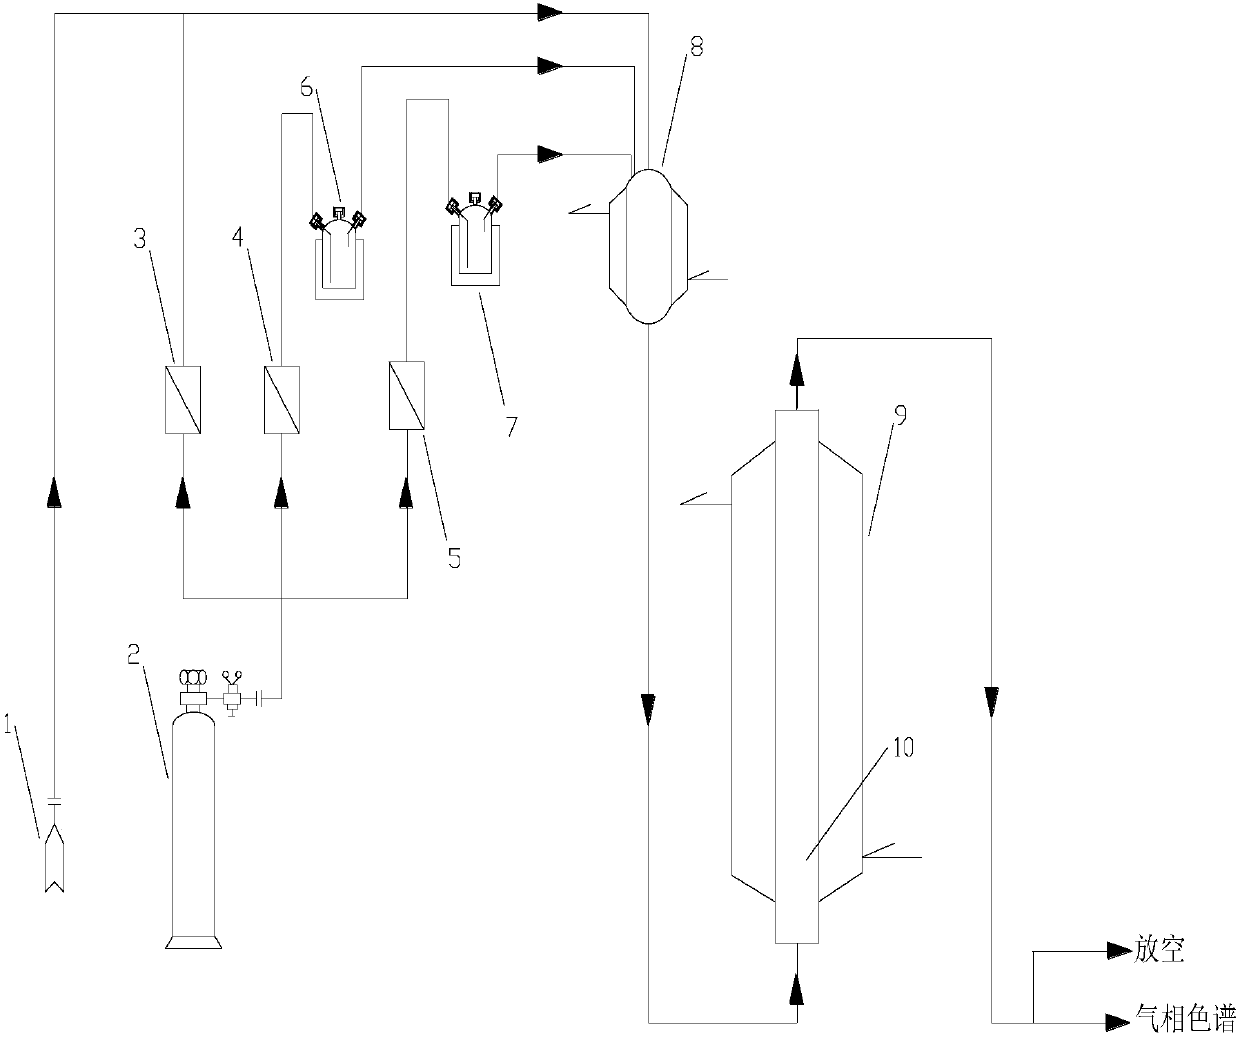 Method for degrading VOCs via normal temperature catalytic oxidation